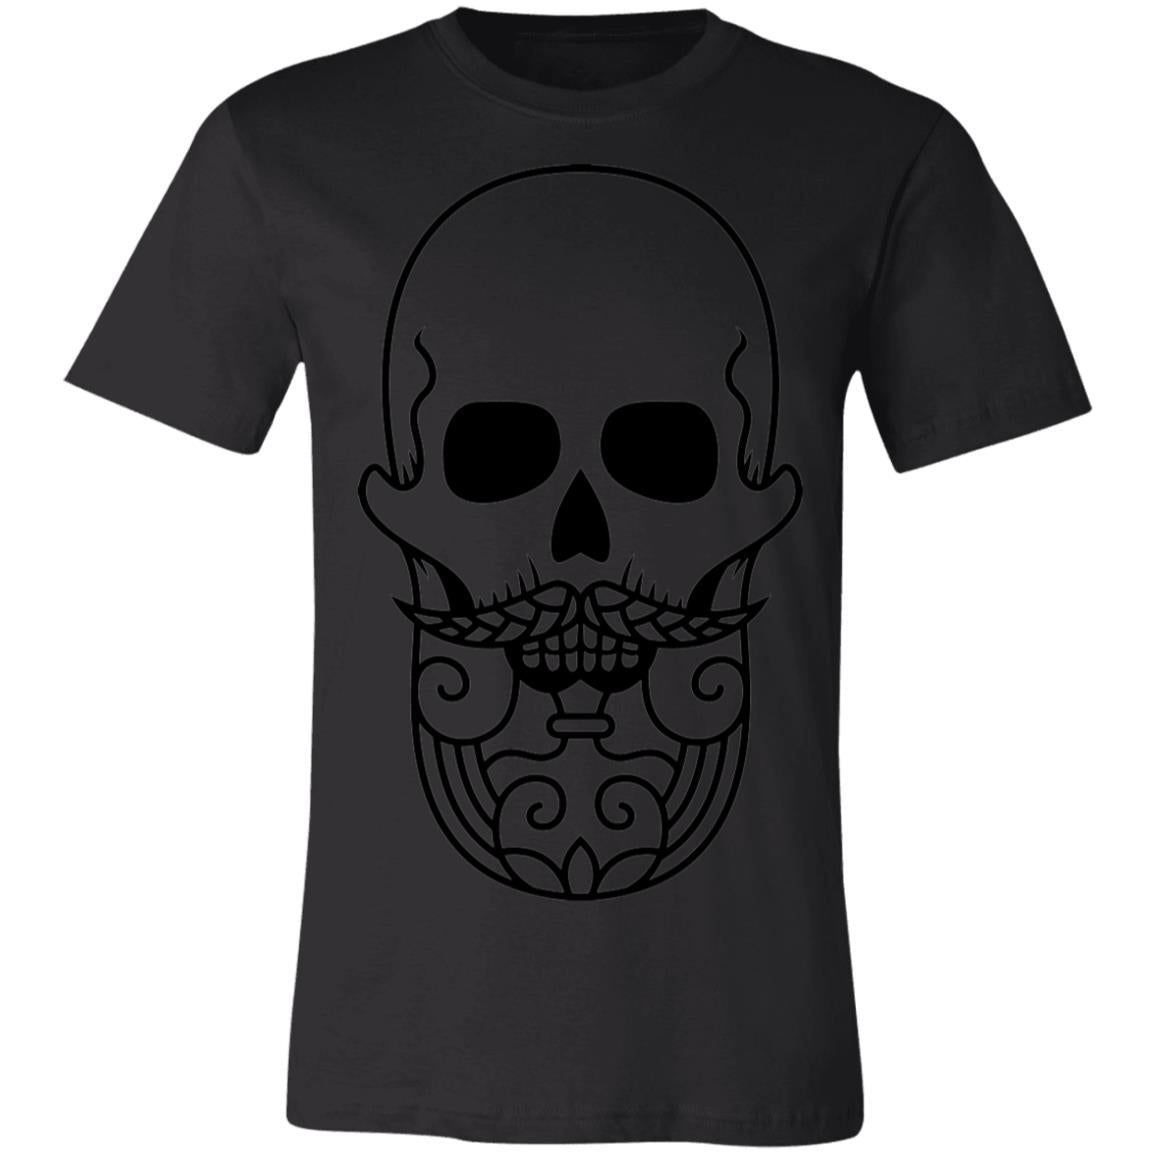 Skull 41 Santa Muerte Shirt-Express Your Love Gifts